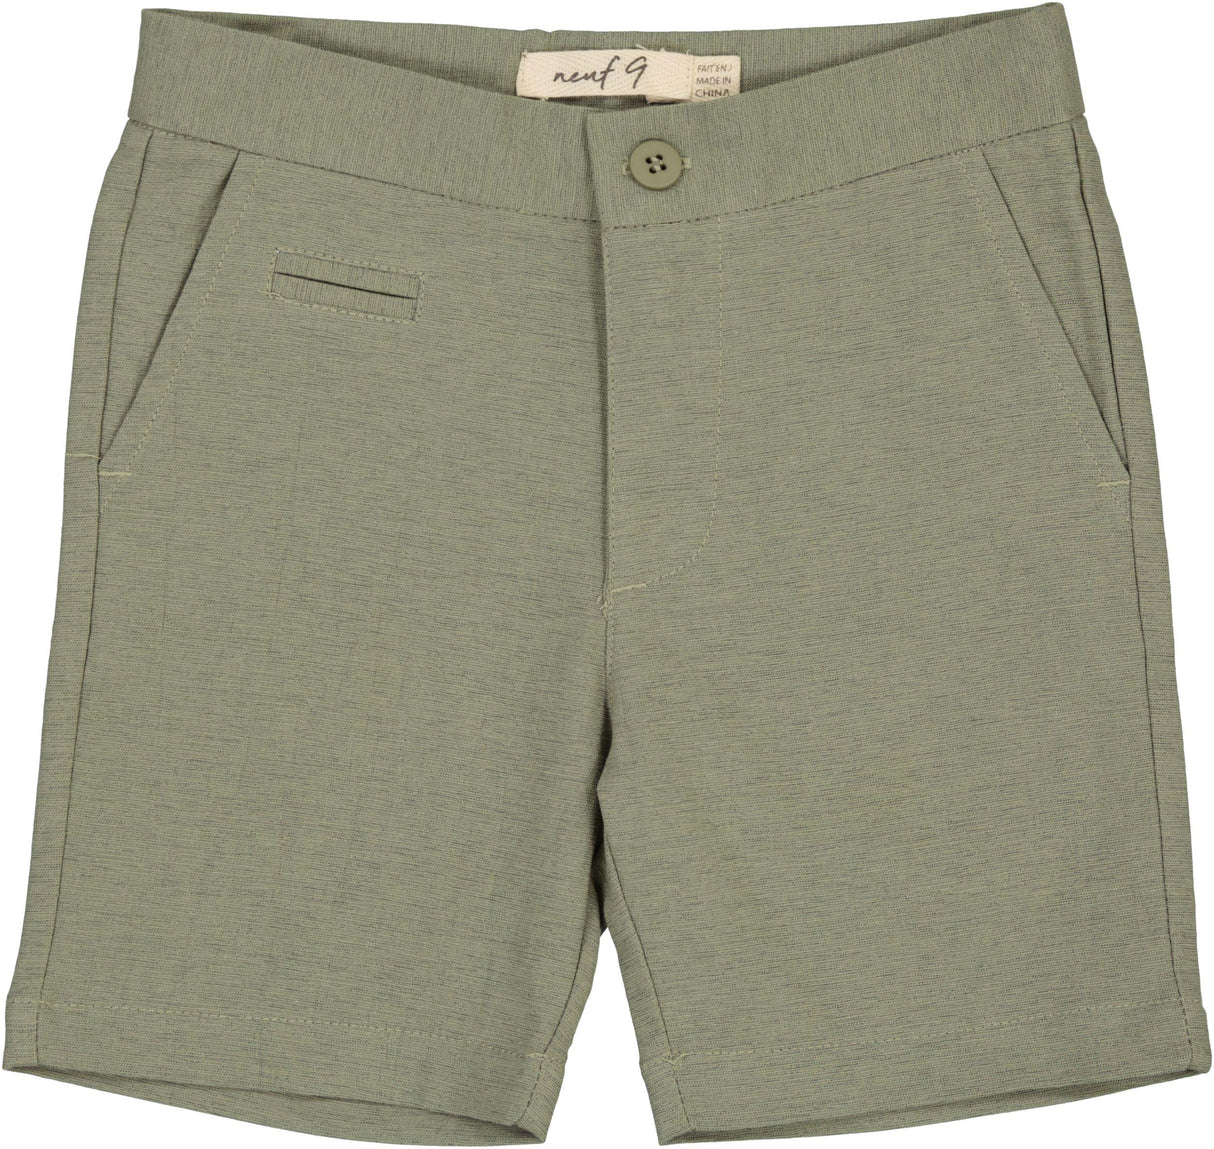 Neuf 9 Boys Shorts - SB1CP307